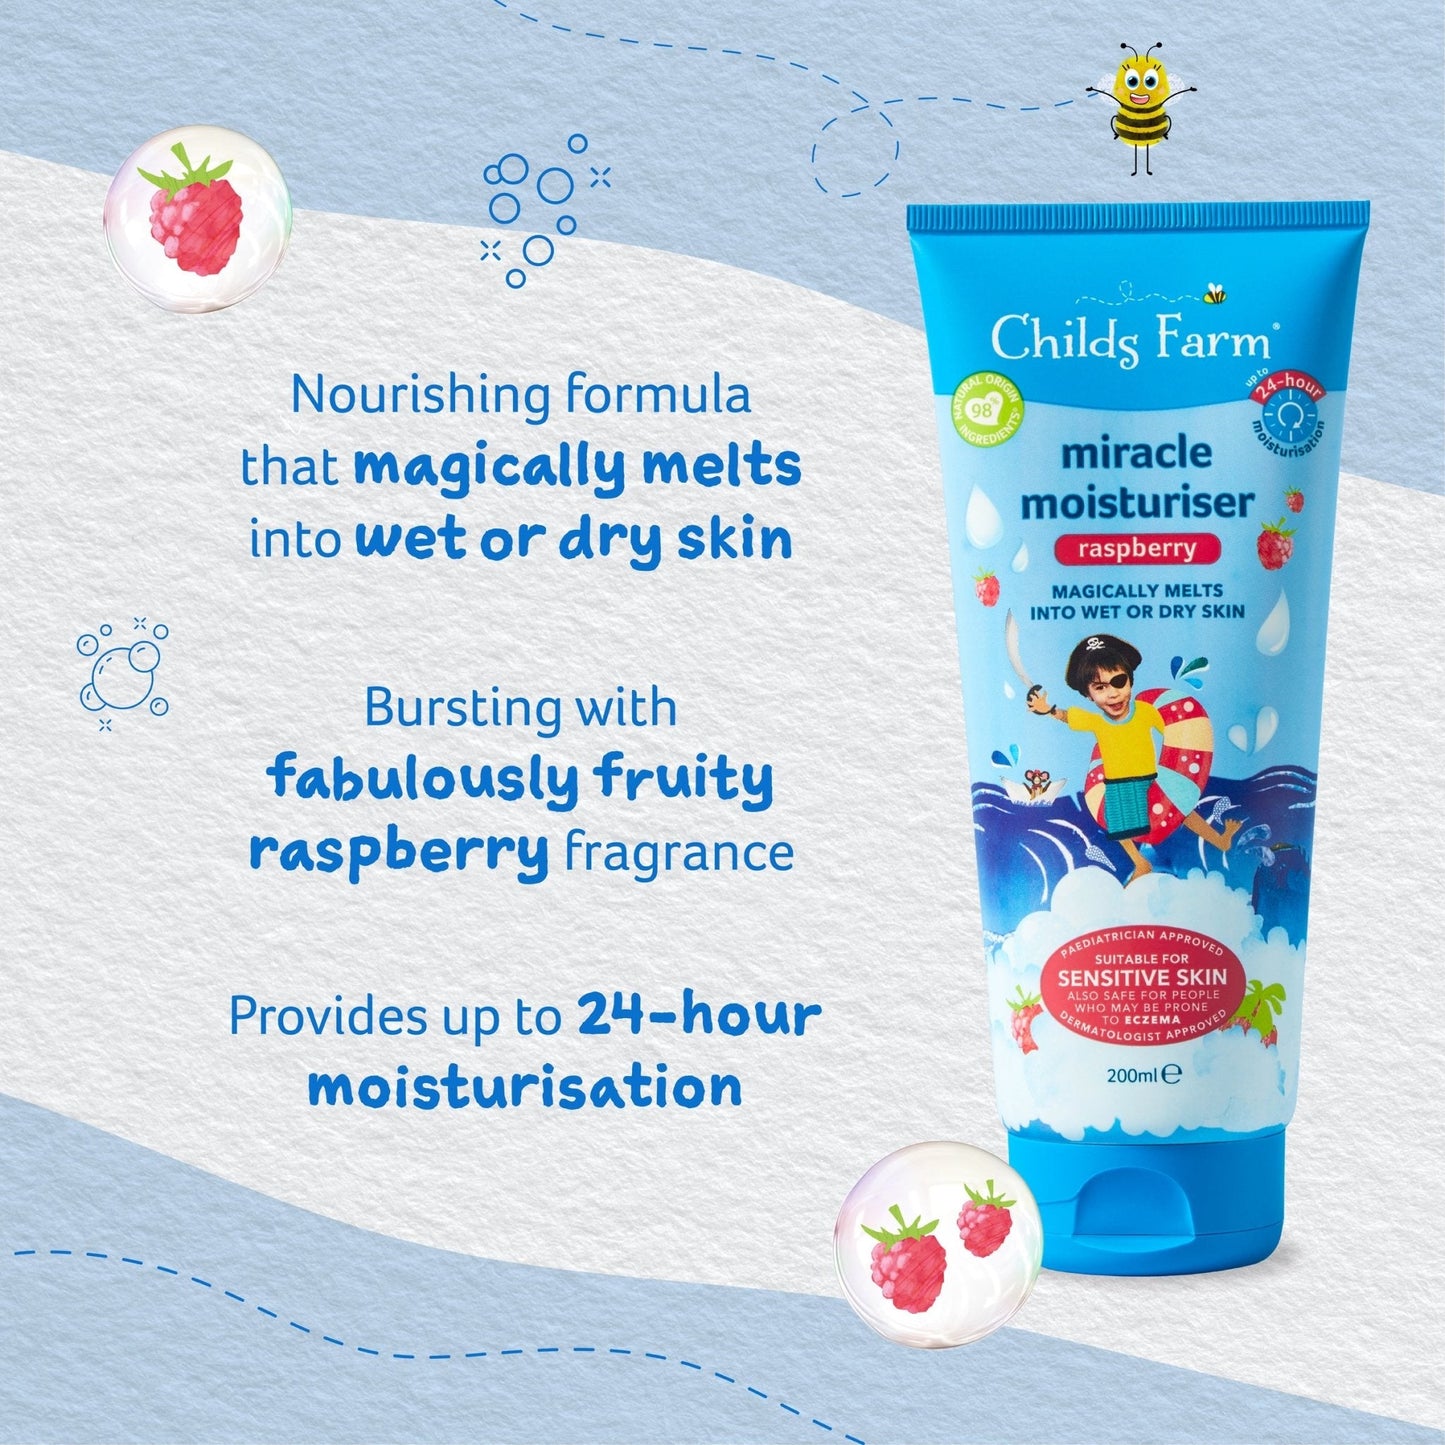 Childs Farm miracle moisturiser raspberry